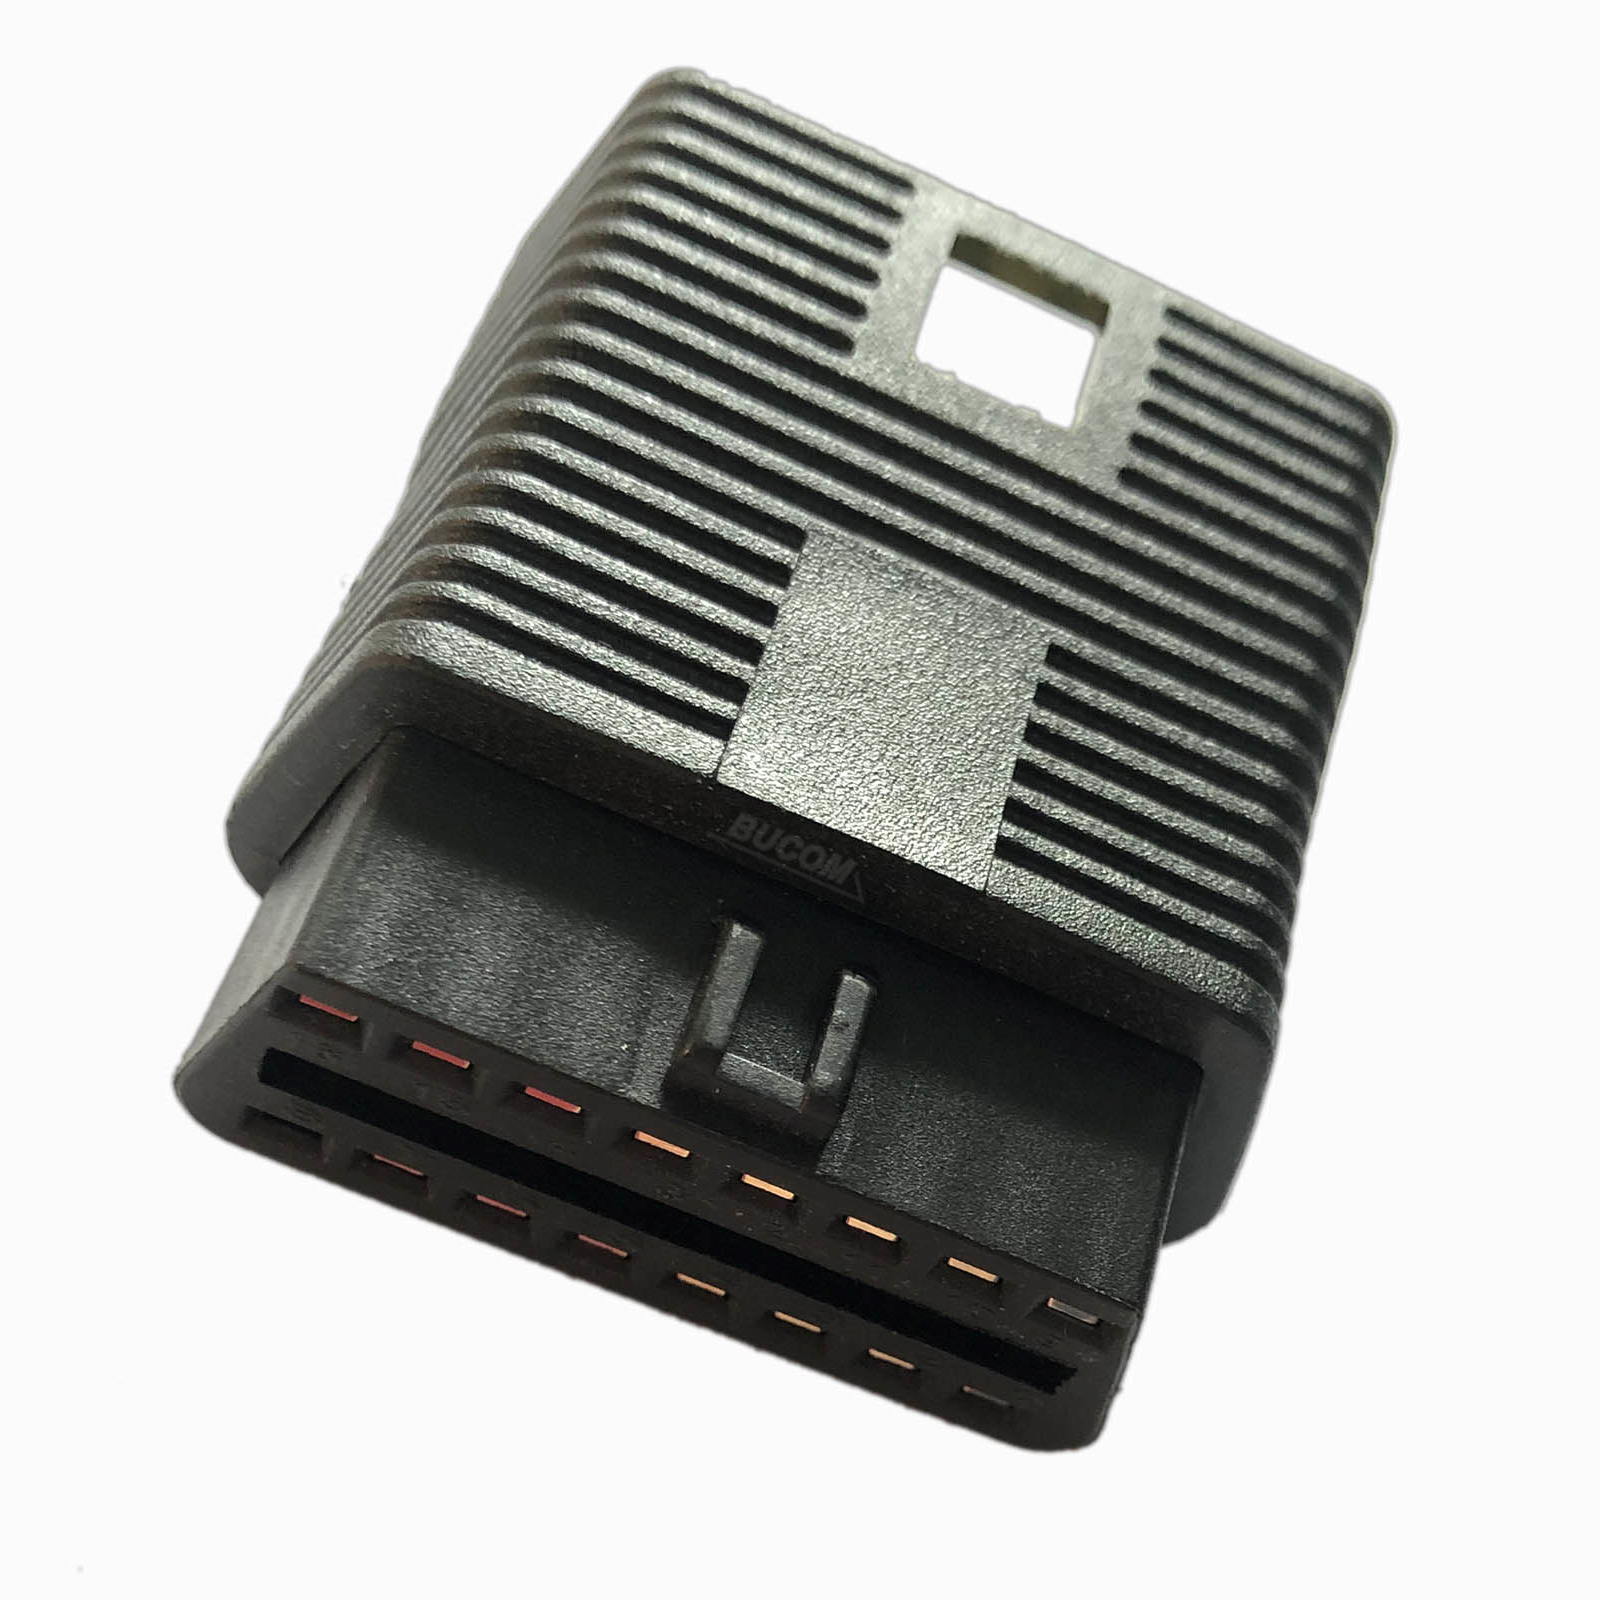  OBD 2 II 16 Pin Norm Stecker auf Buchse Auto  Diagnose Interface Adapter